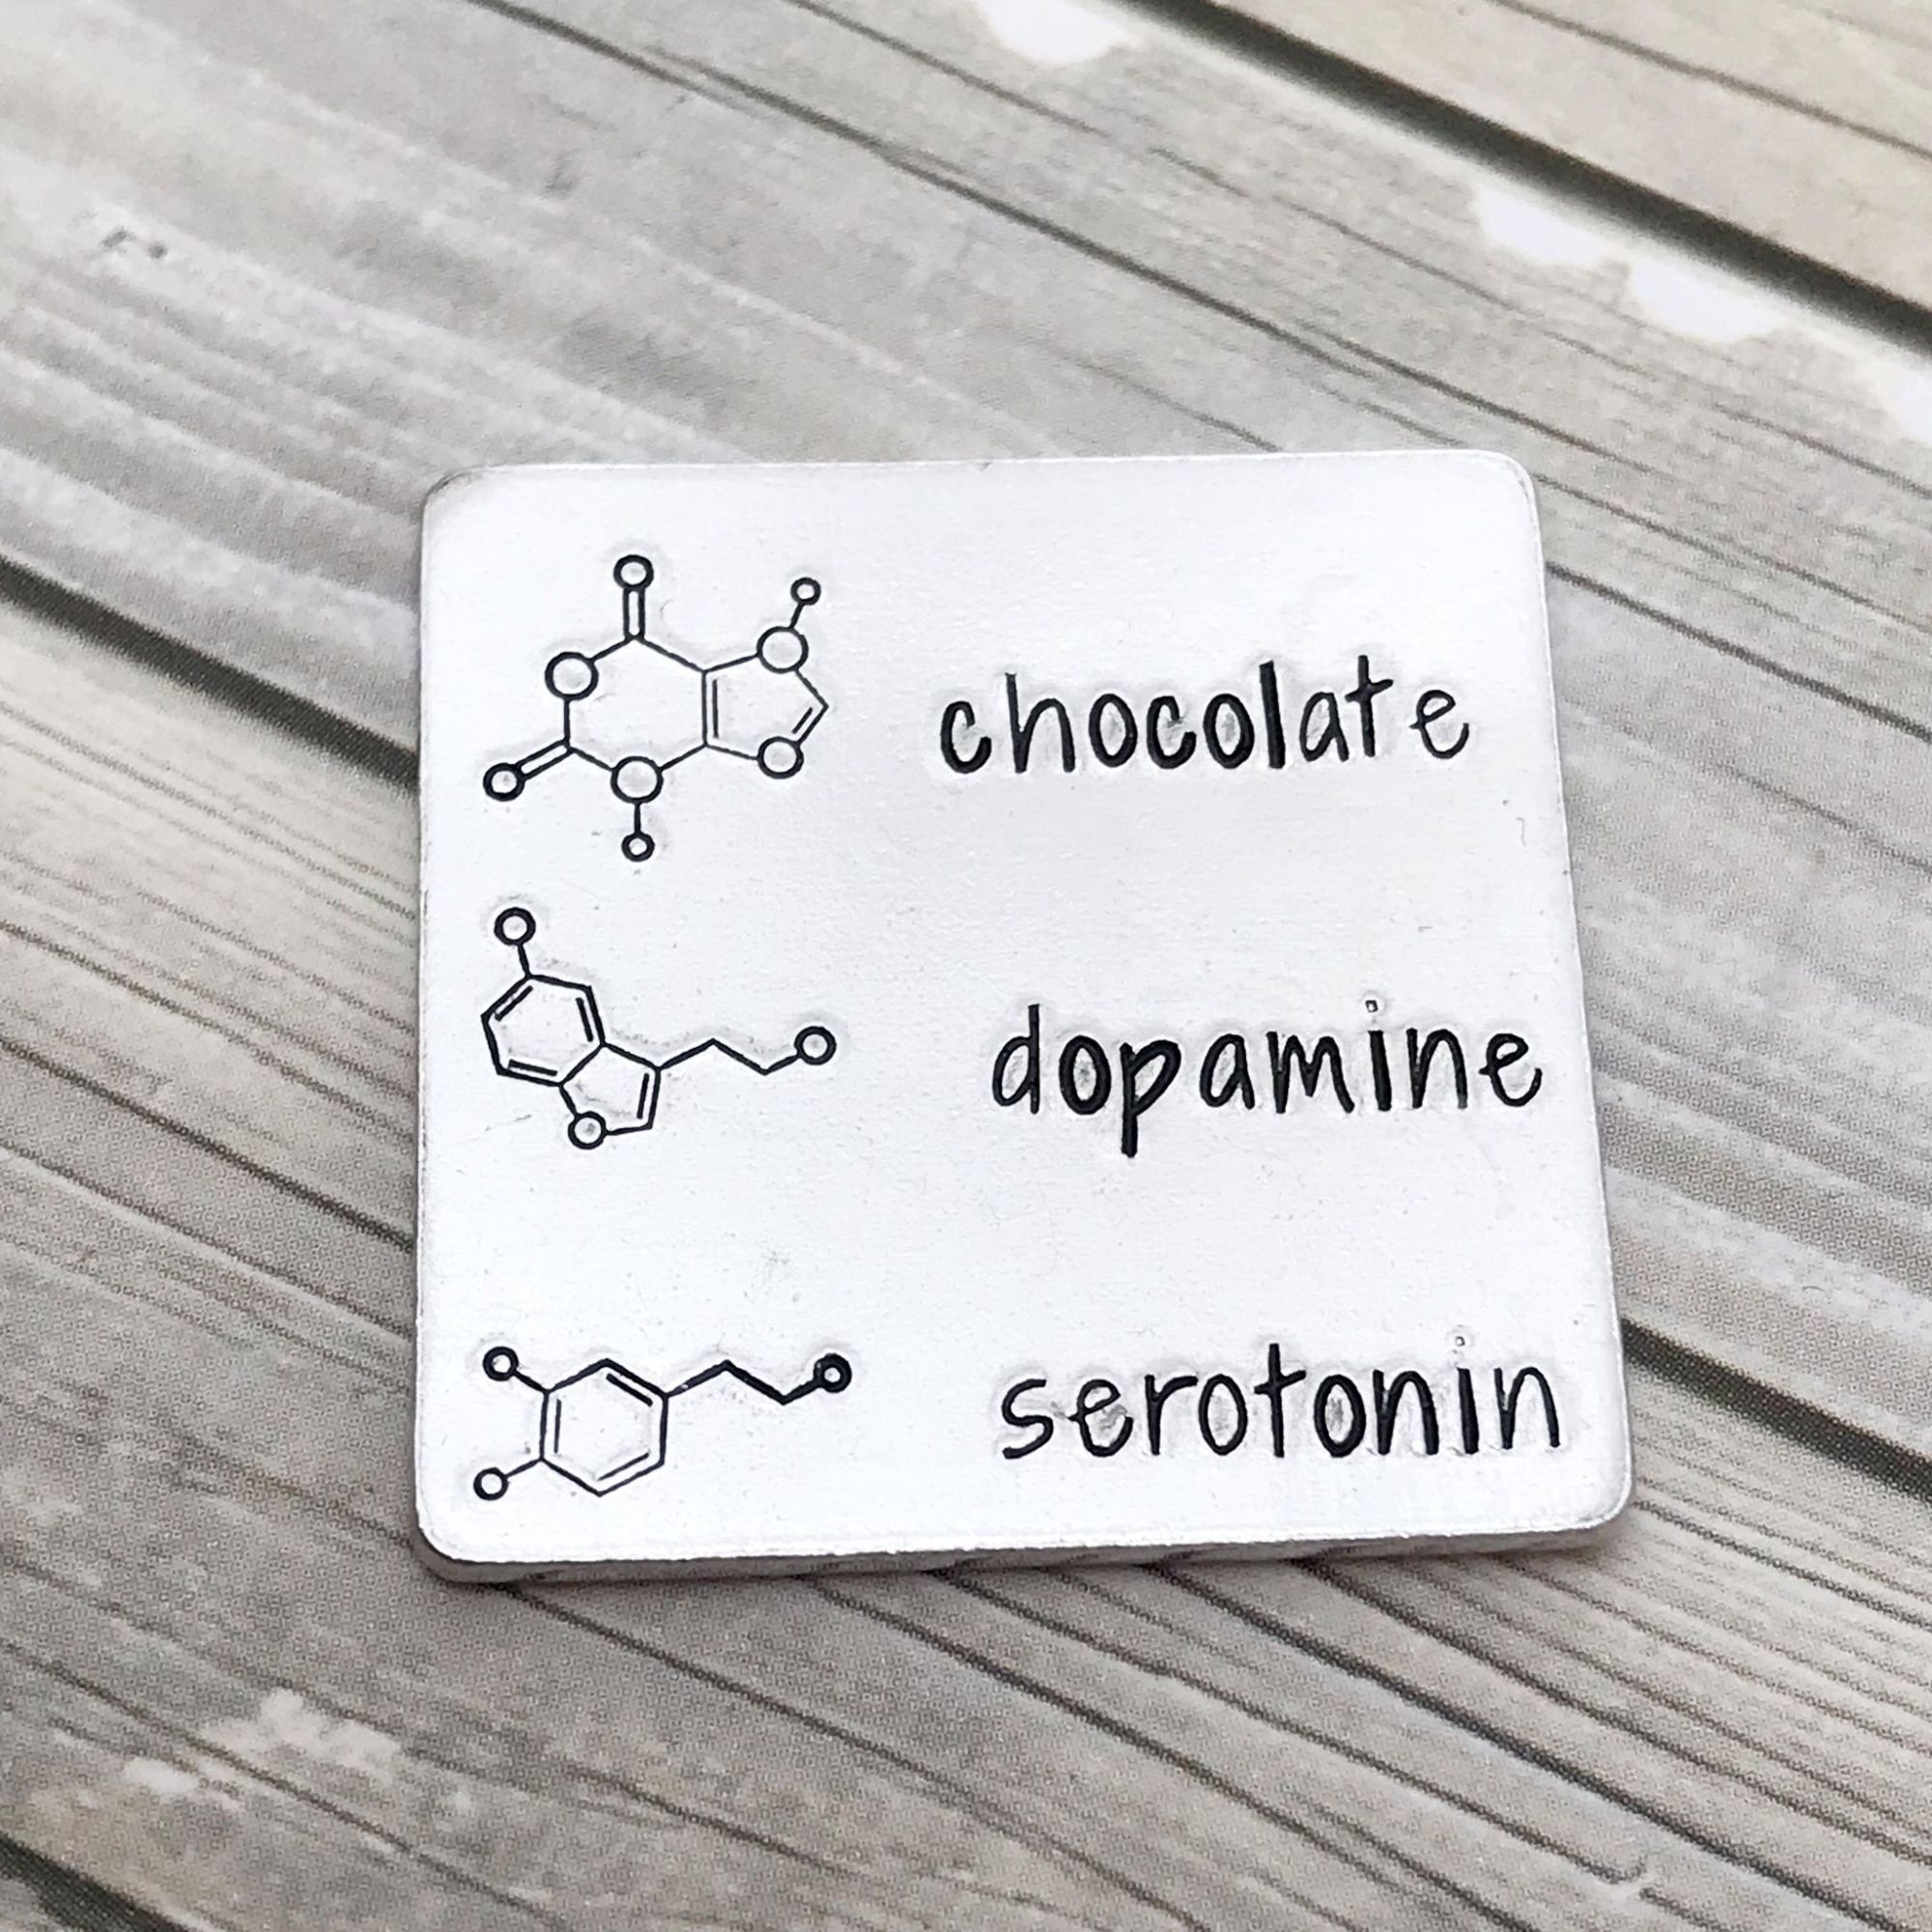 Chemical sybols for chocolate, dopamine and serotonin